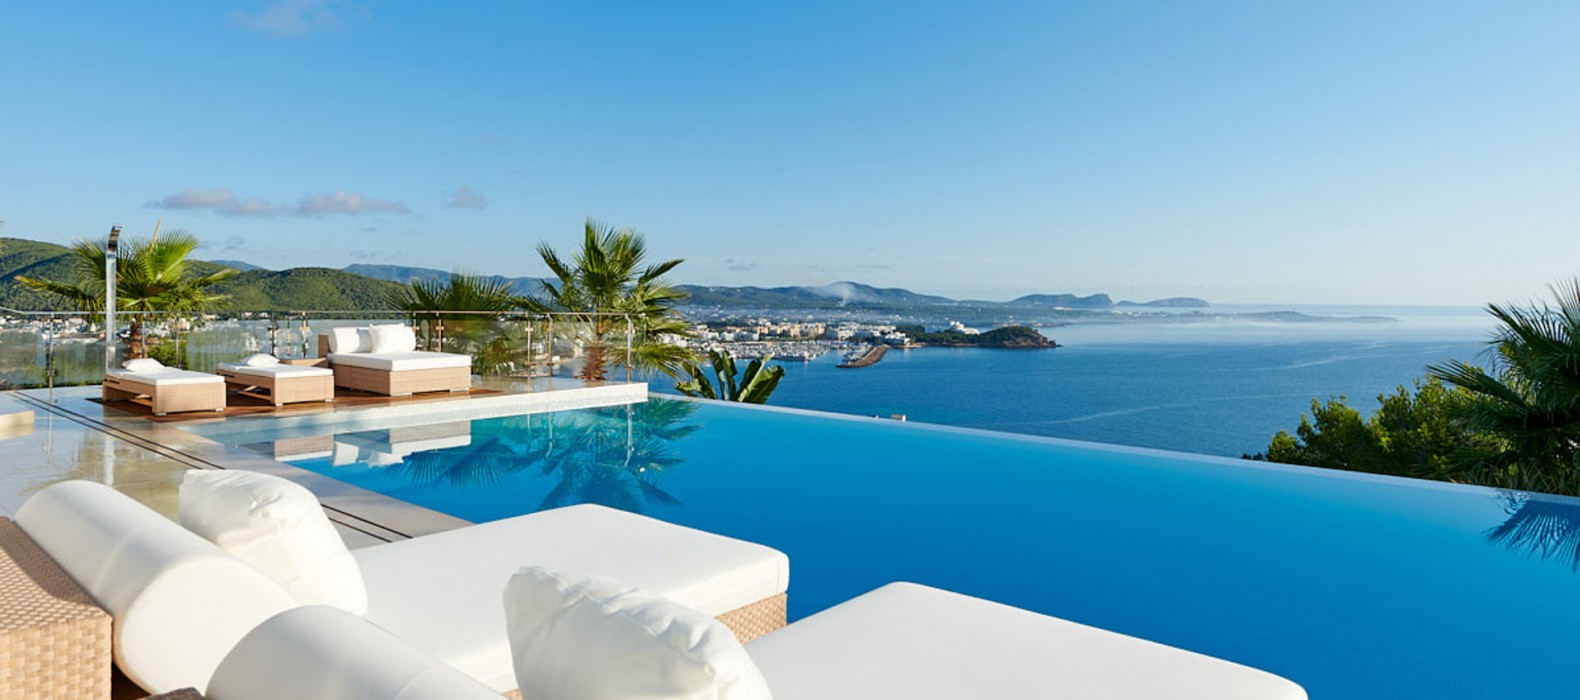 Sun loungers with sea view of Casa Petite in Ibiza